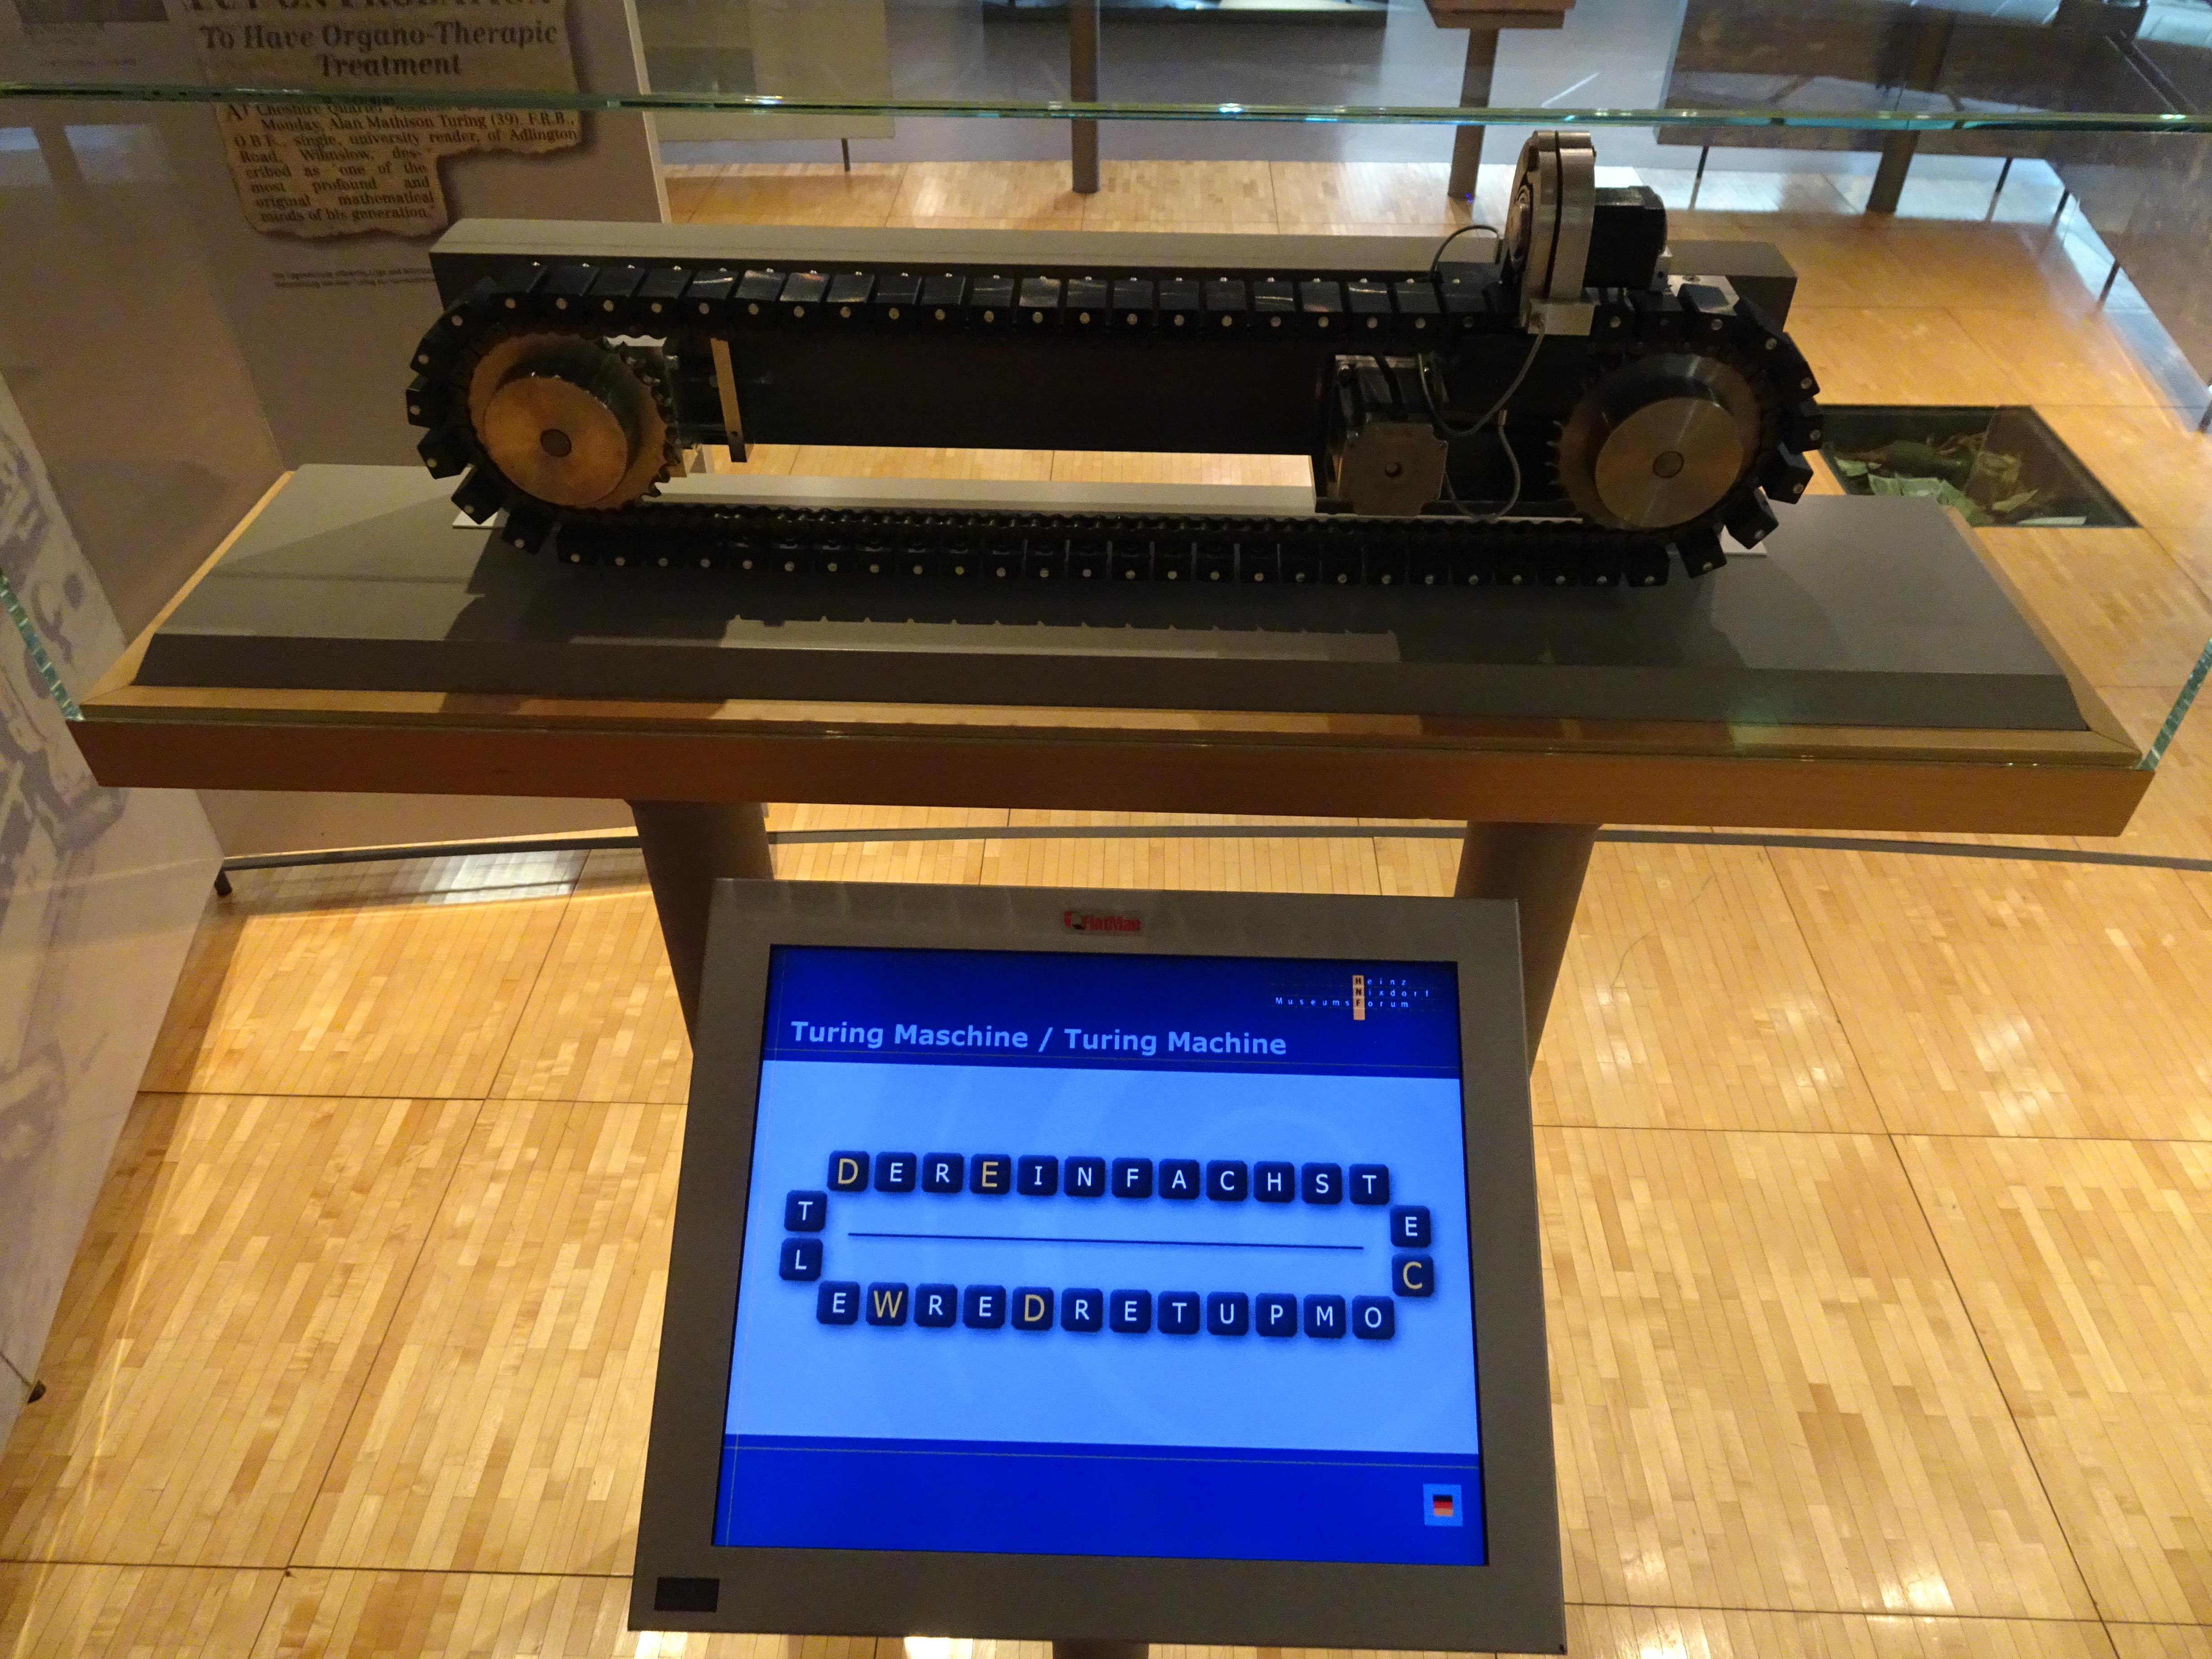 An electromechanical Turing machine museum exhibit